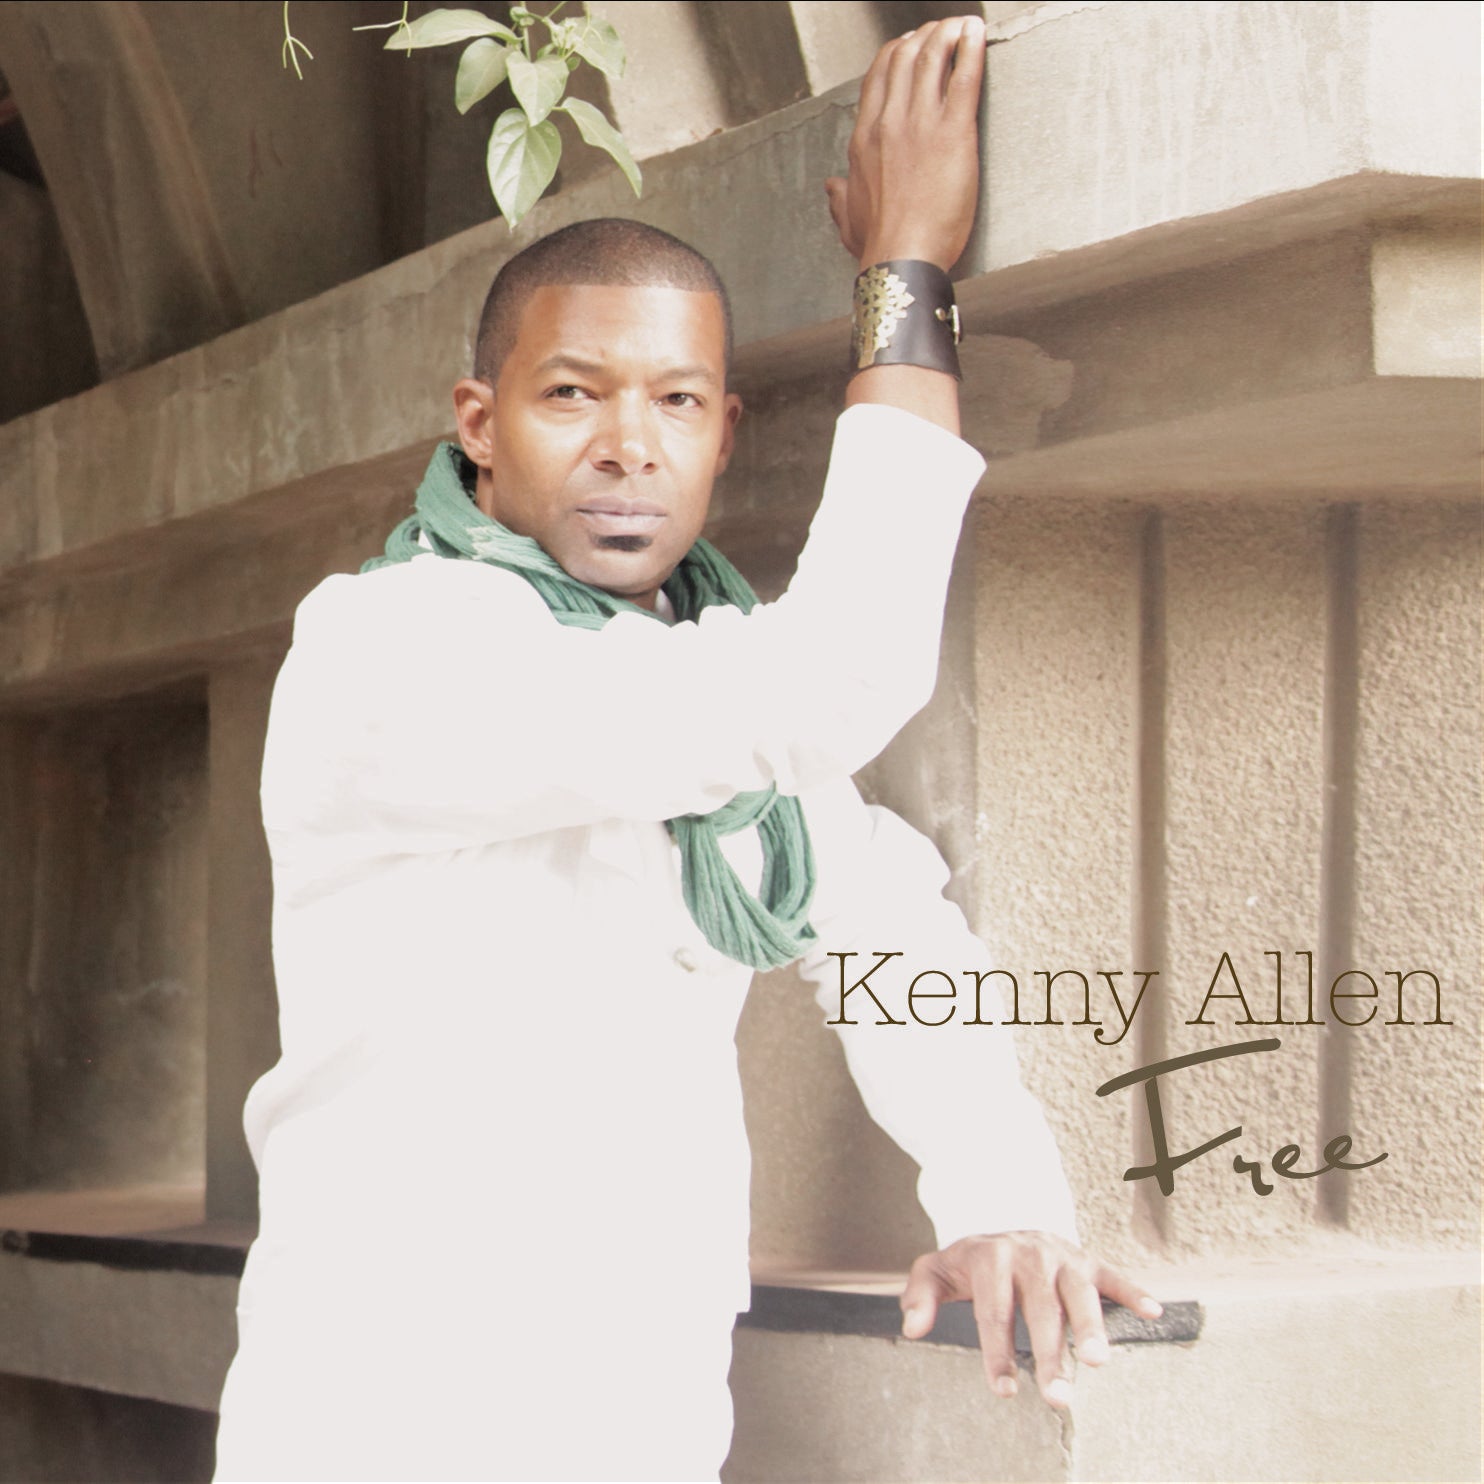 Kenny Allen / Free